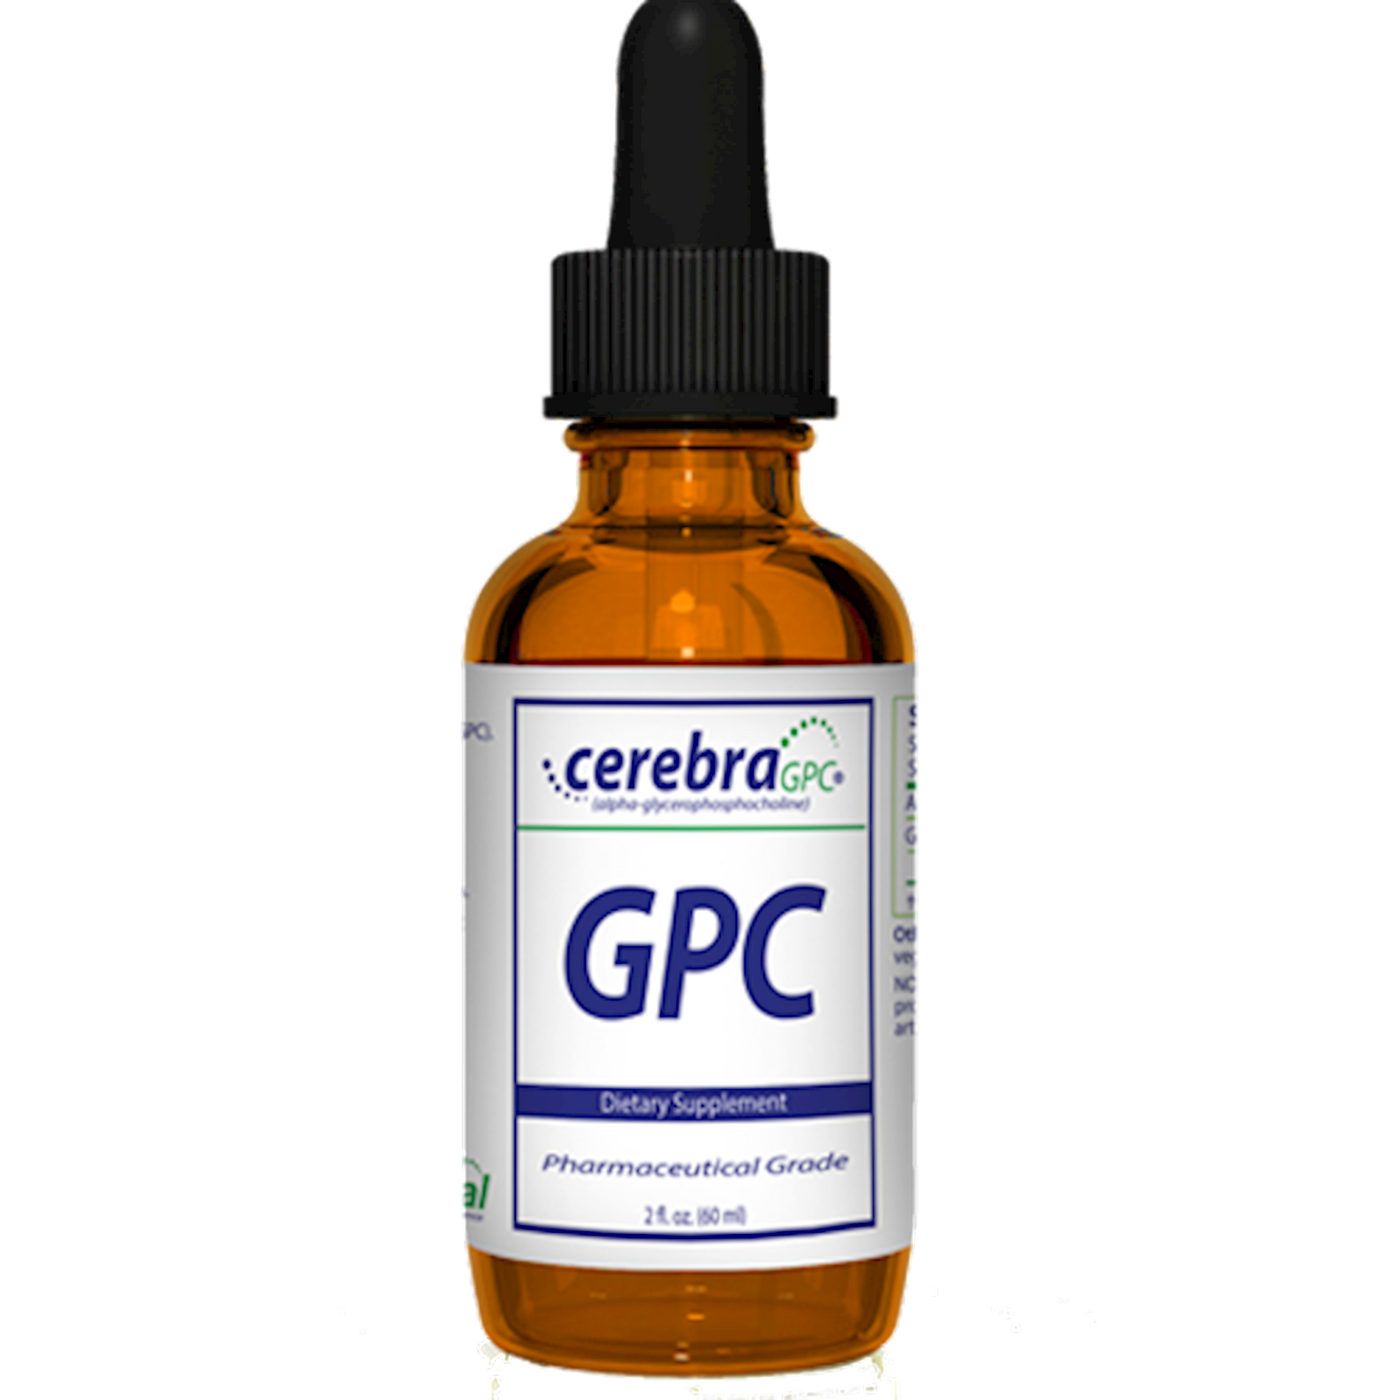 Cerebera GPC 2 fl oz Curated Wellness